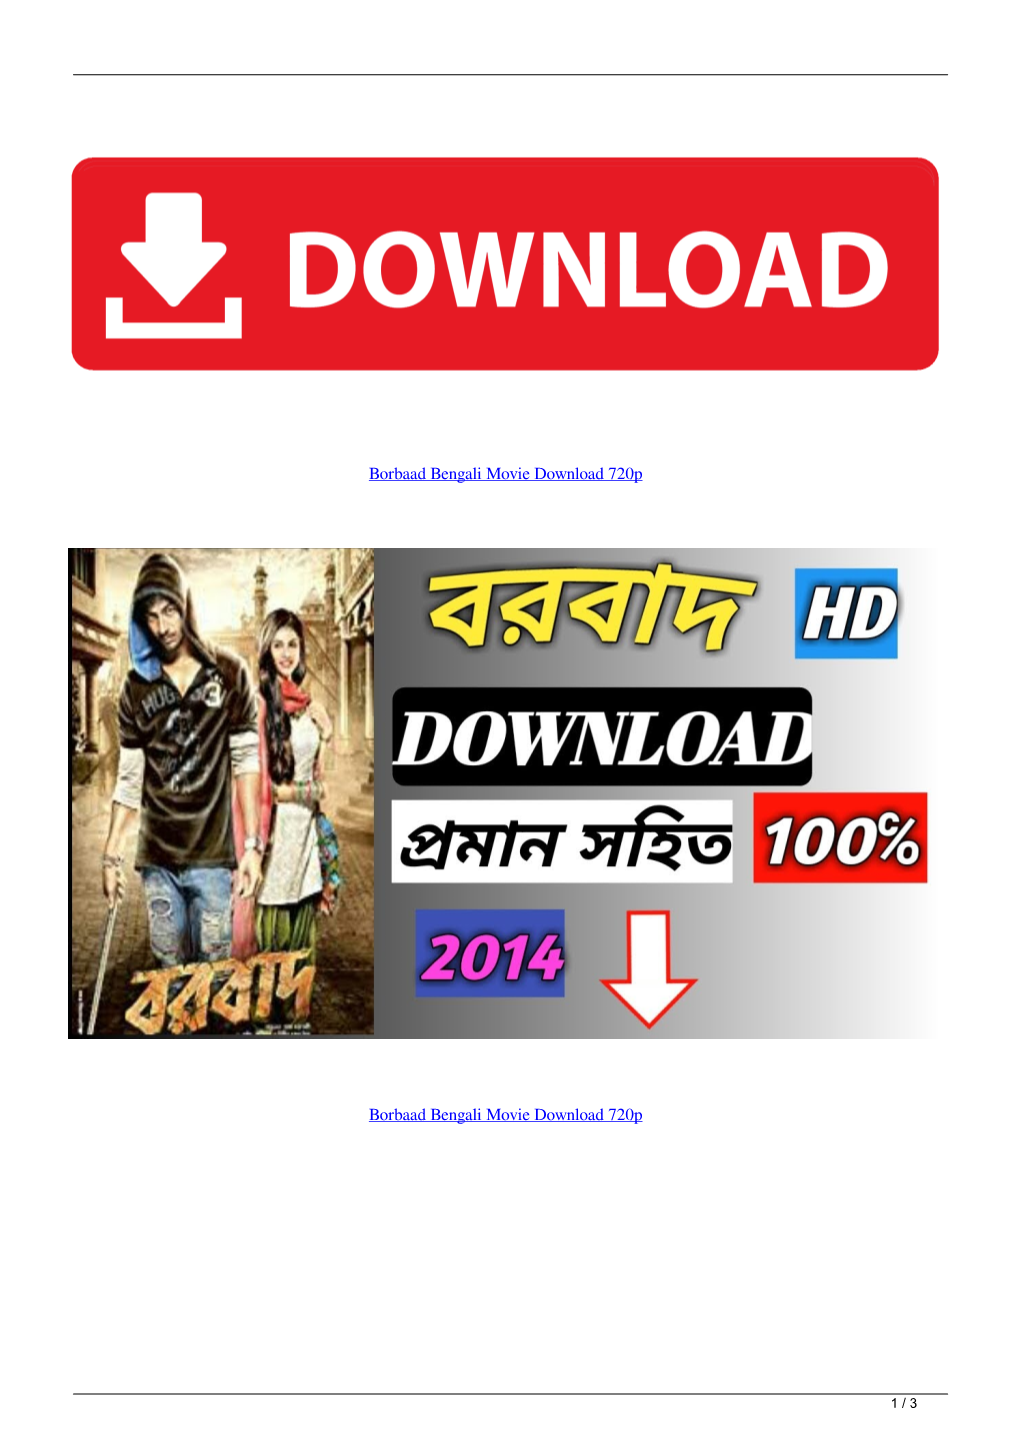 Borbaad Bengali Movie Download 720P